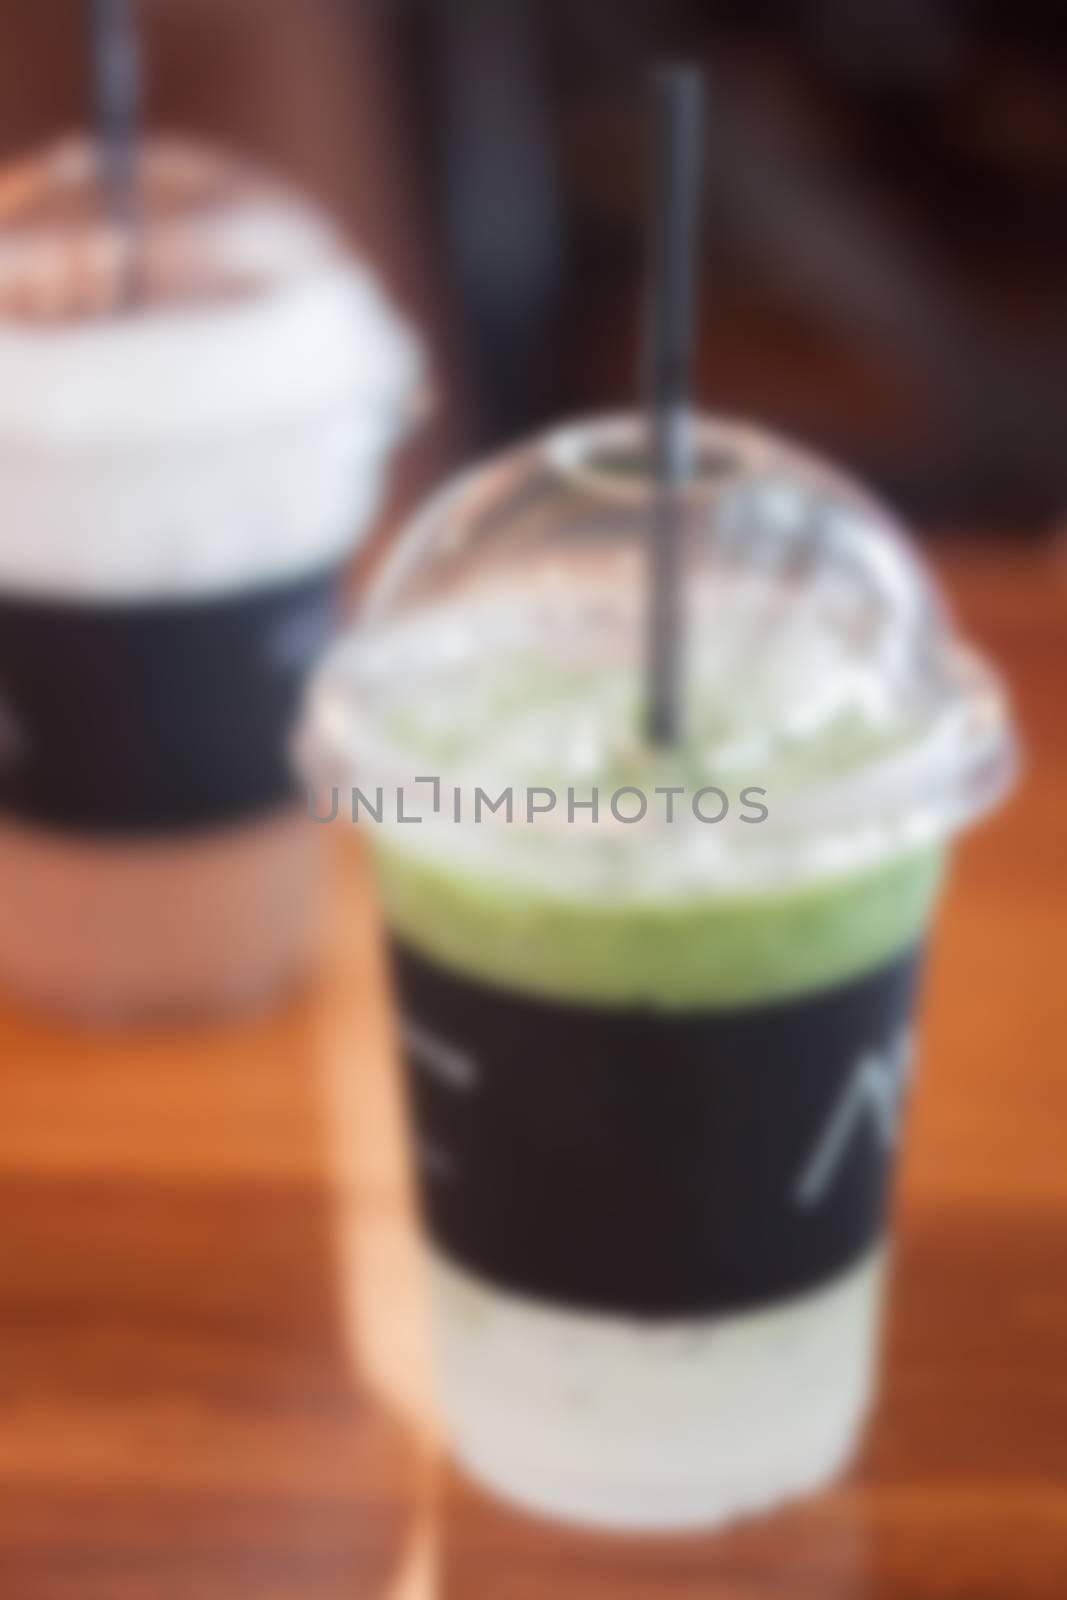 Iced matcha green tea latte by punsayaporn